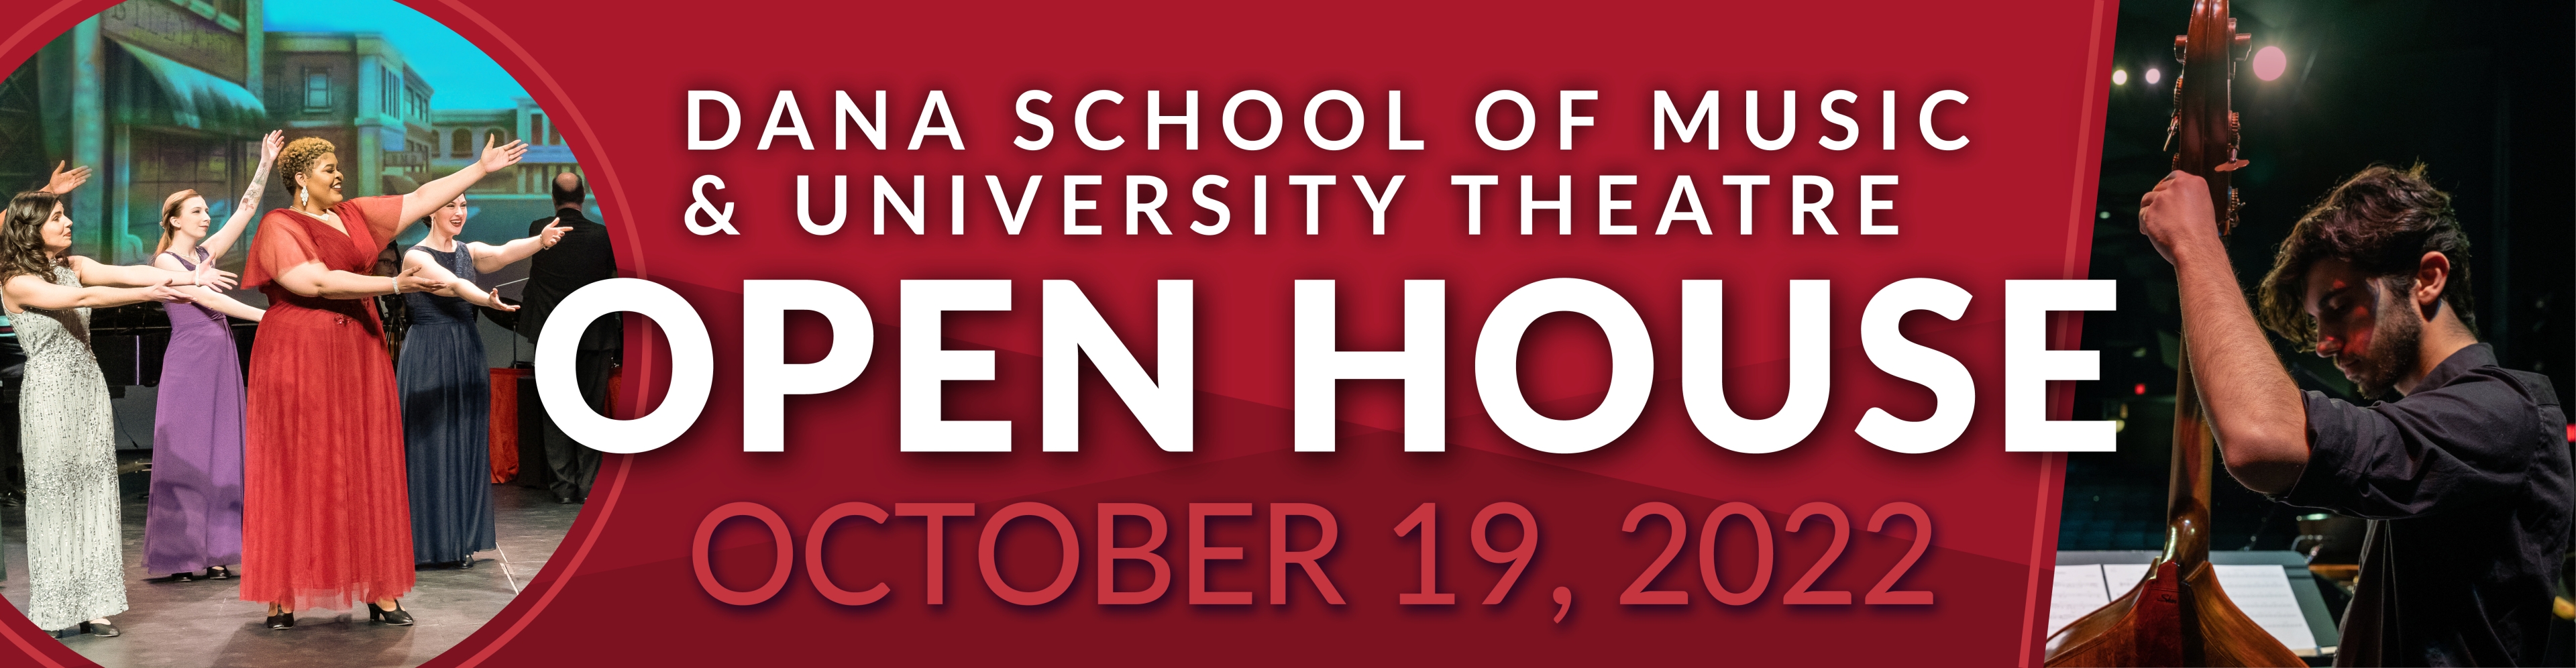 Dana School of Music & University Theatre Open House October 19, 2022